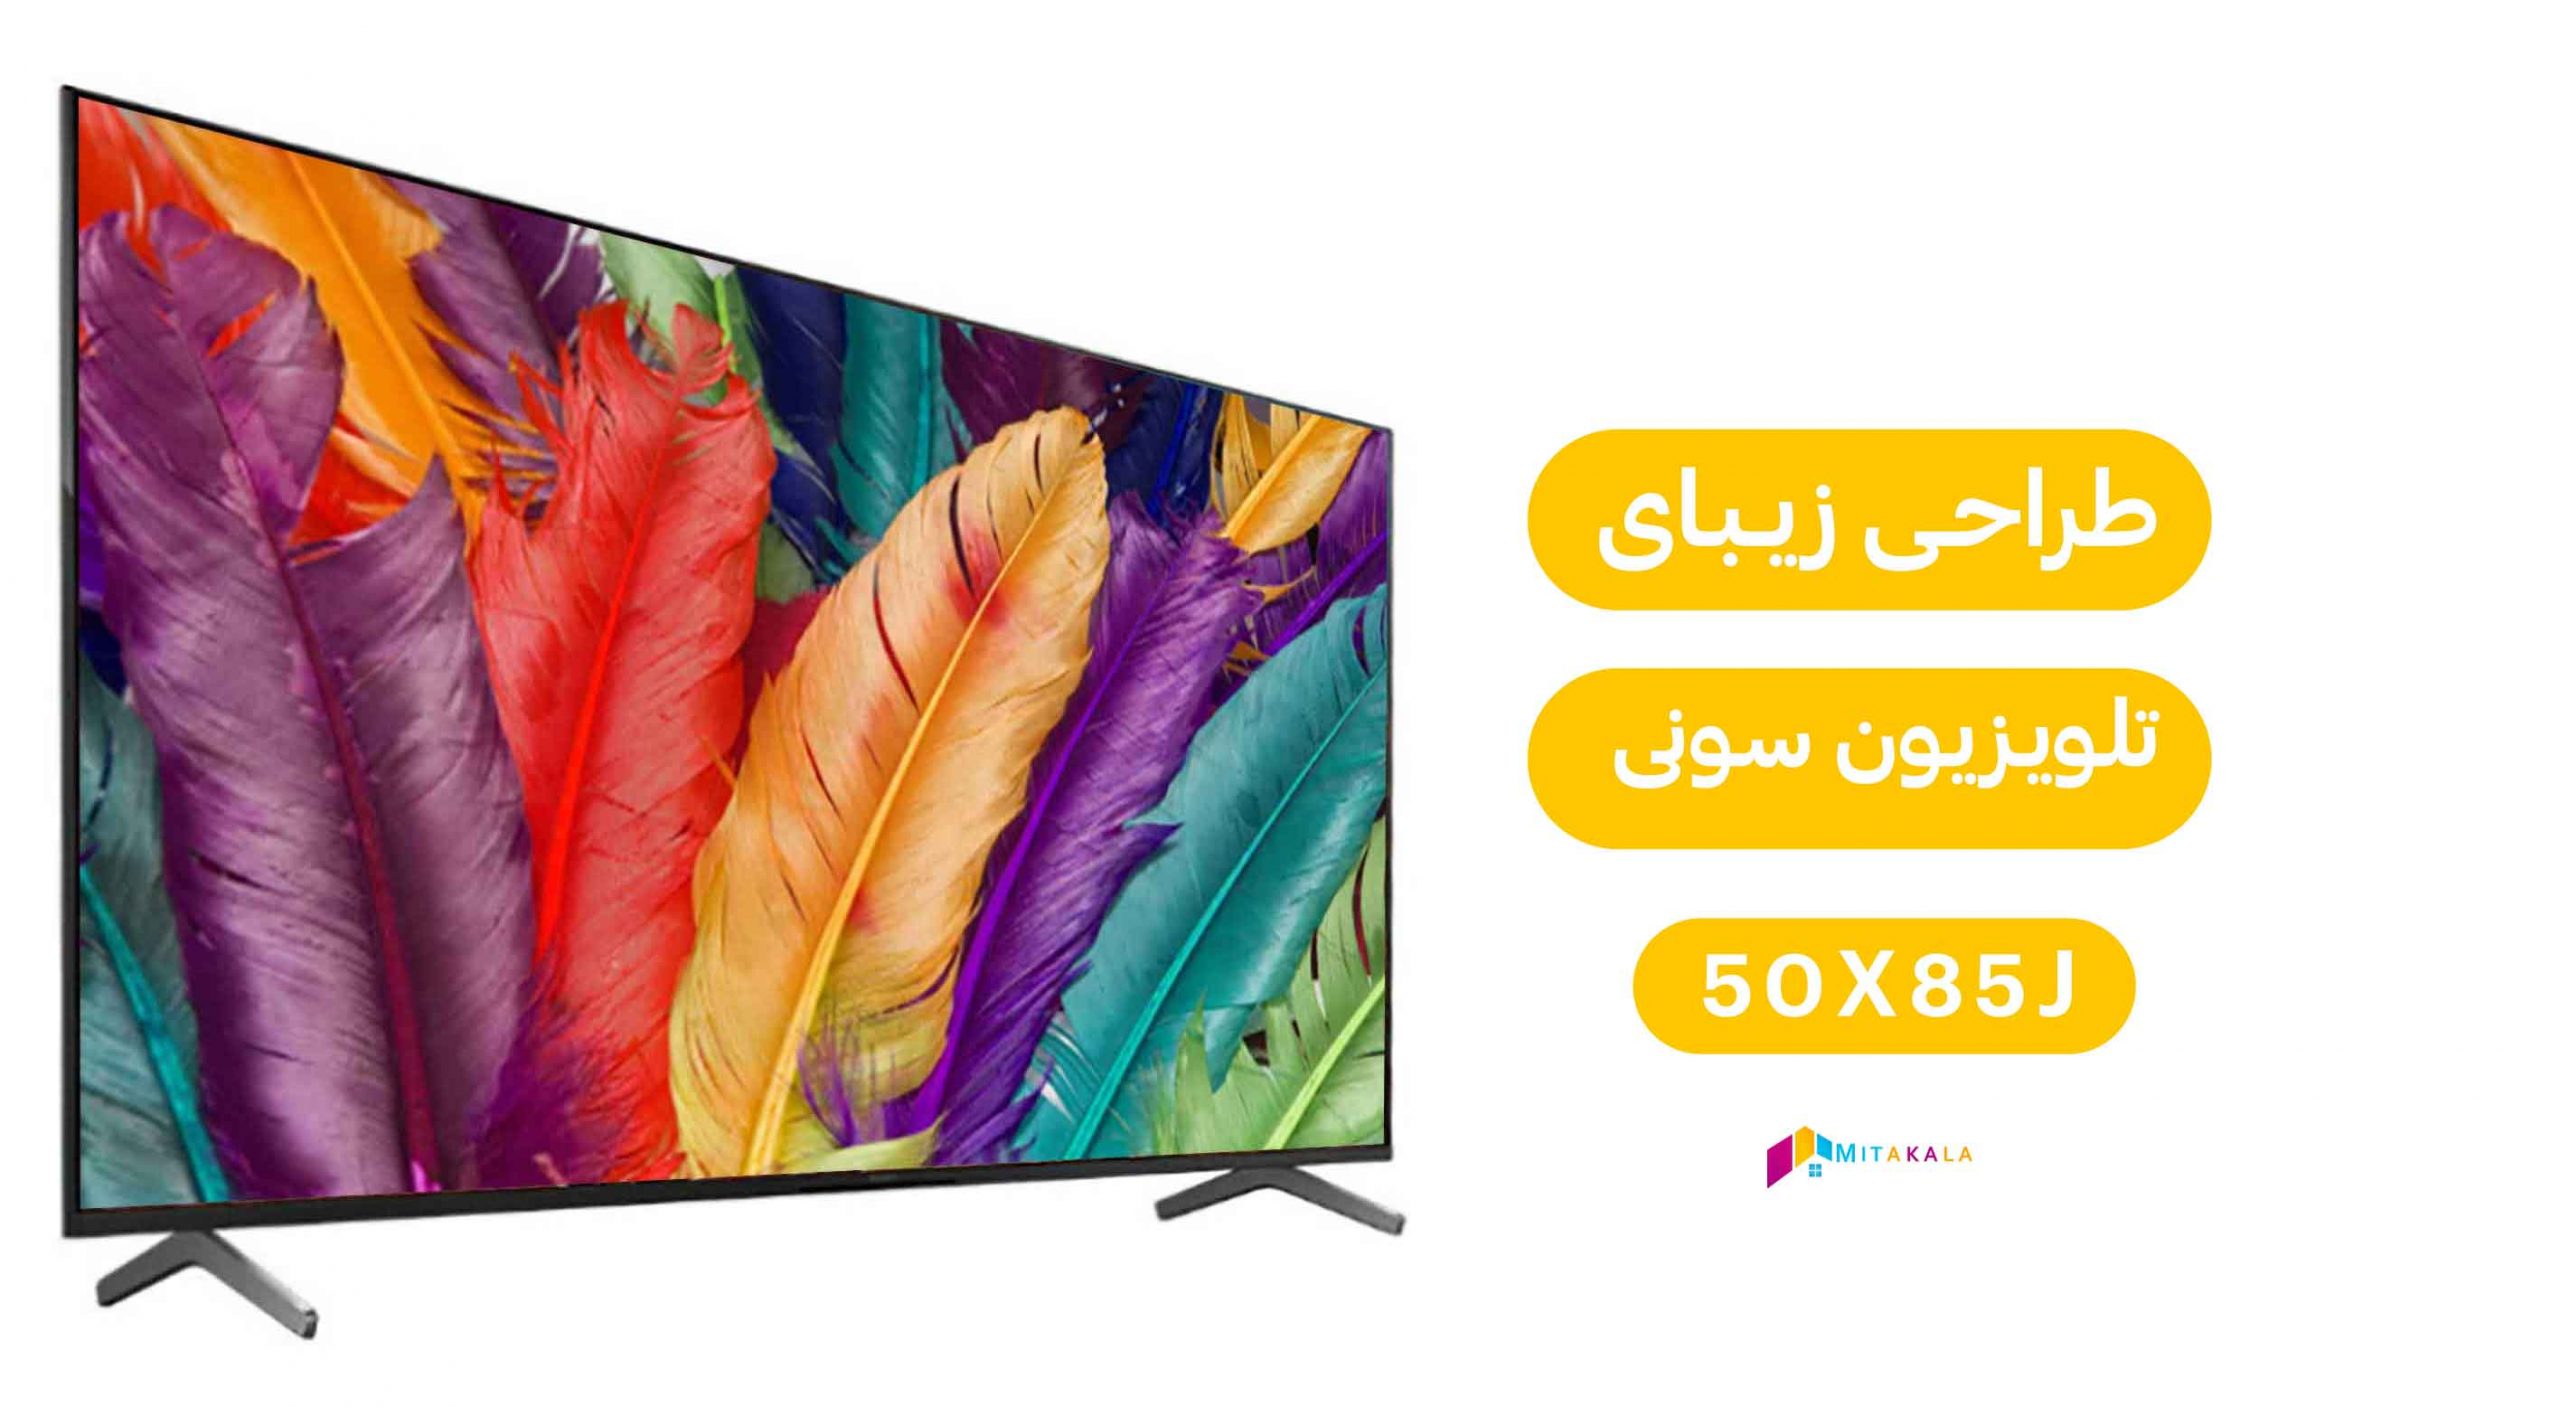 قیمت تلویزیون سونی 50x85j